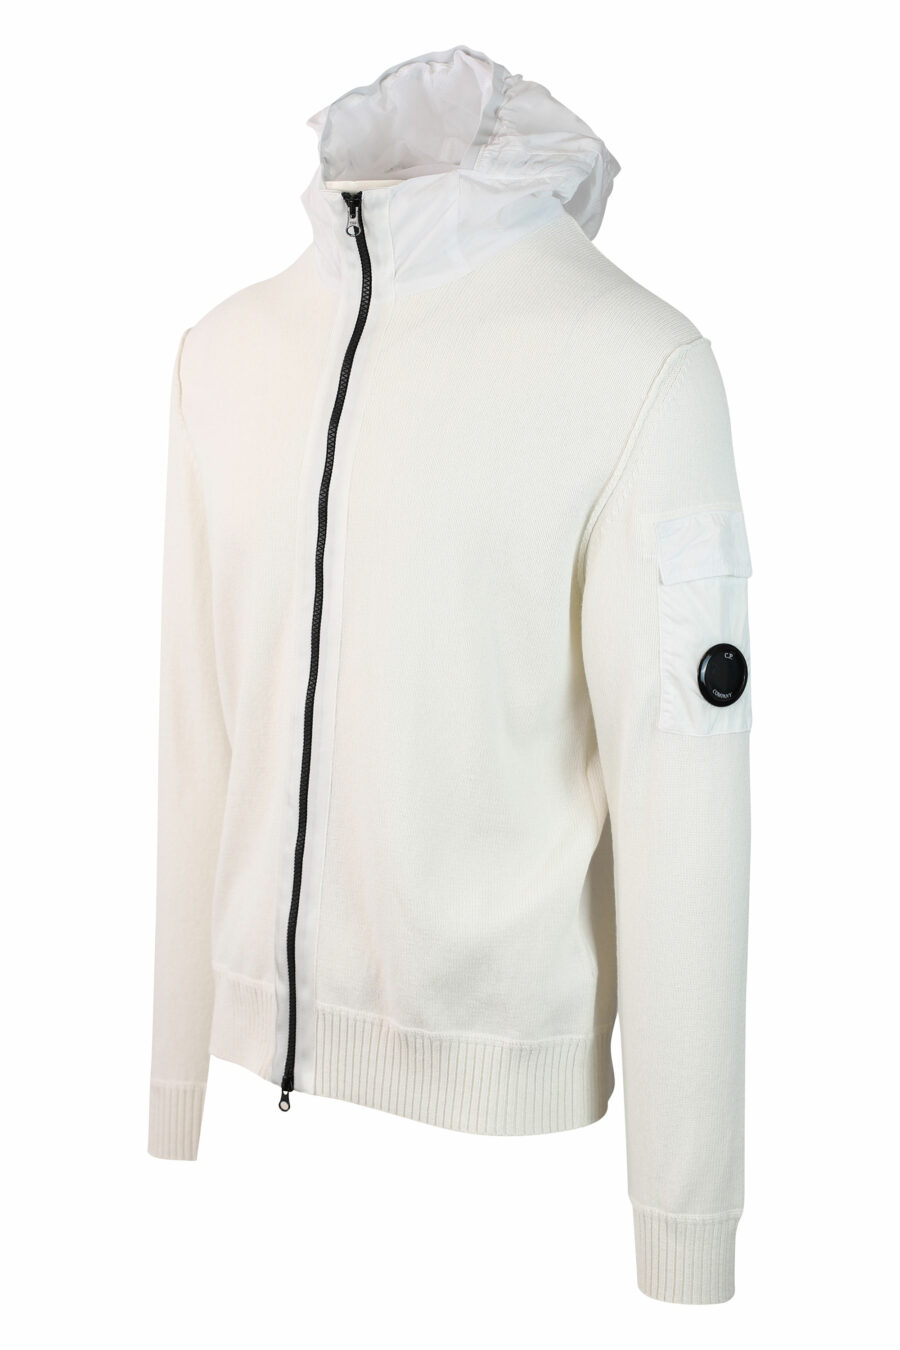 White hooded sweatshirt with zipped hood and circular mini logo - IMG 0129